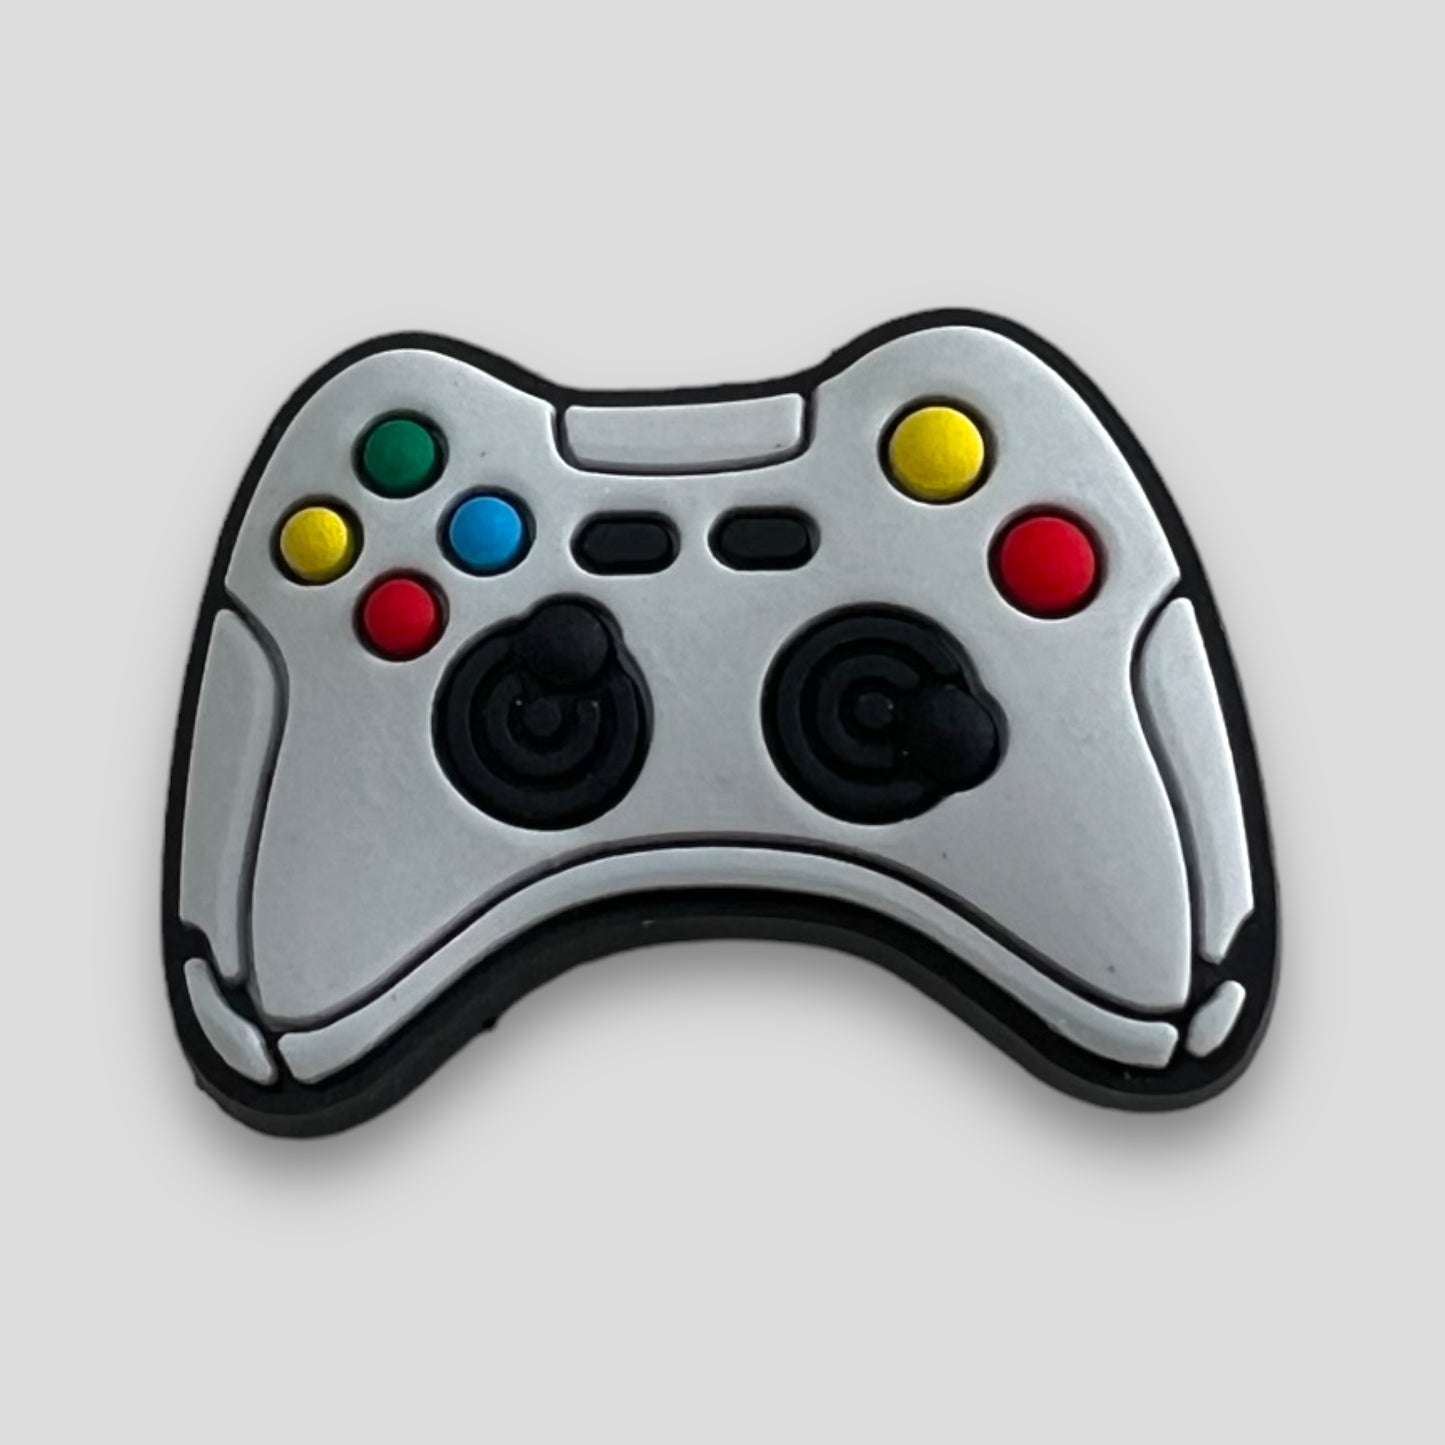 Grey Controller | Gaming